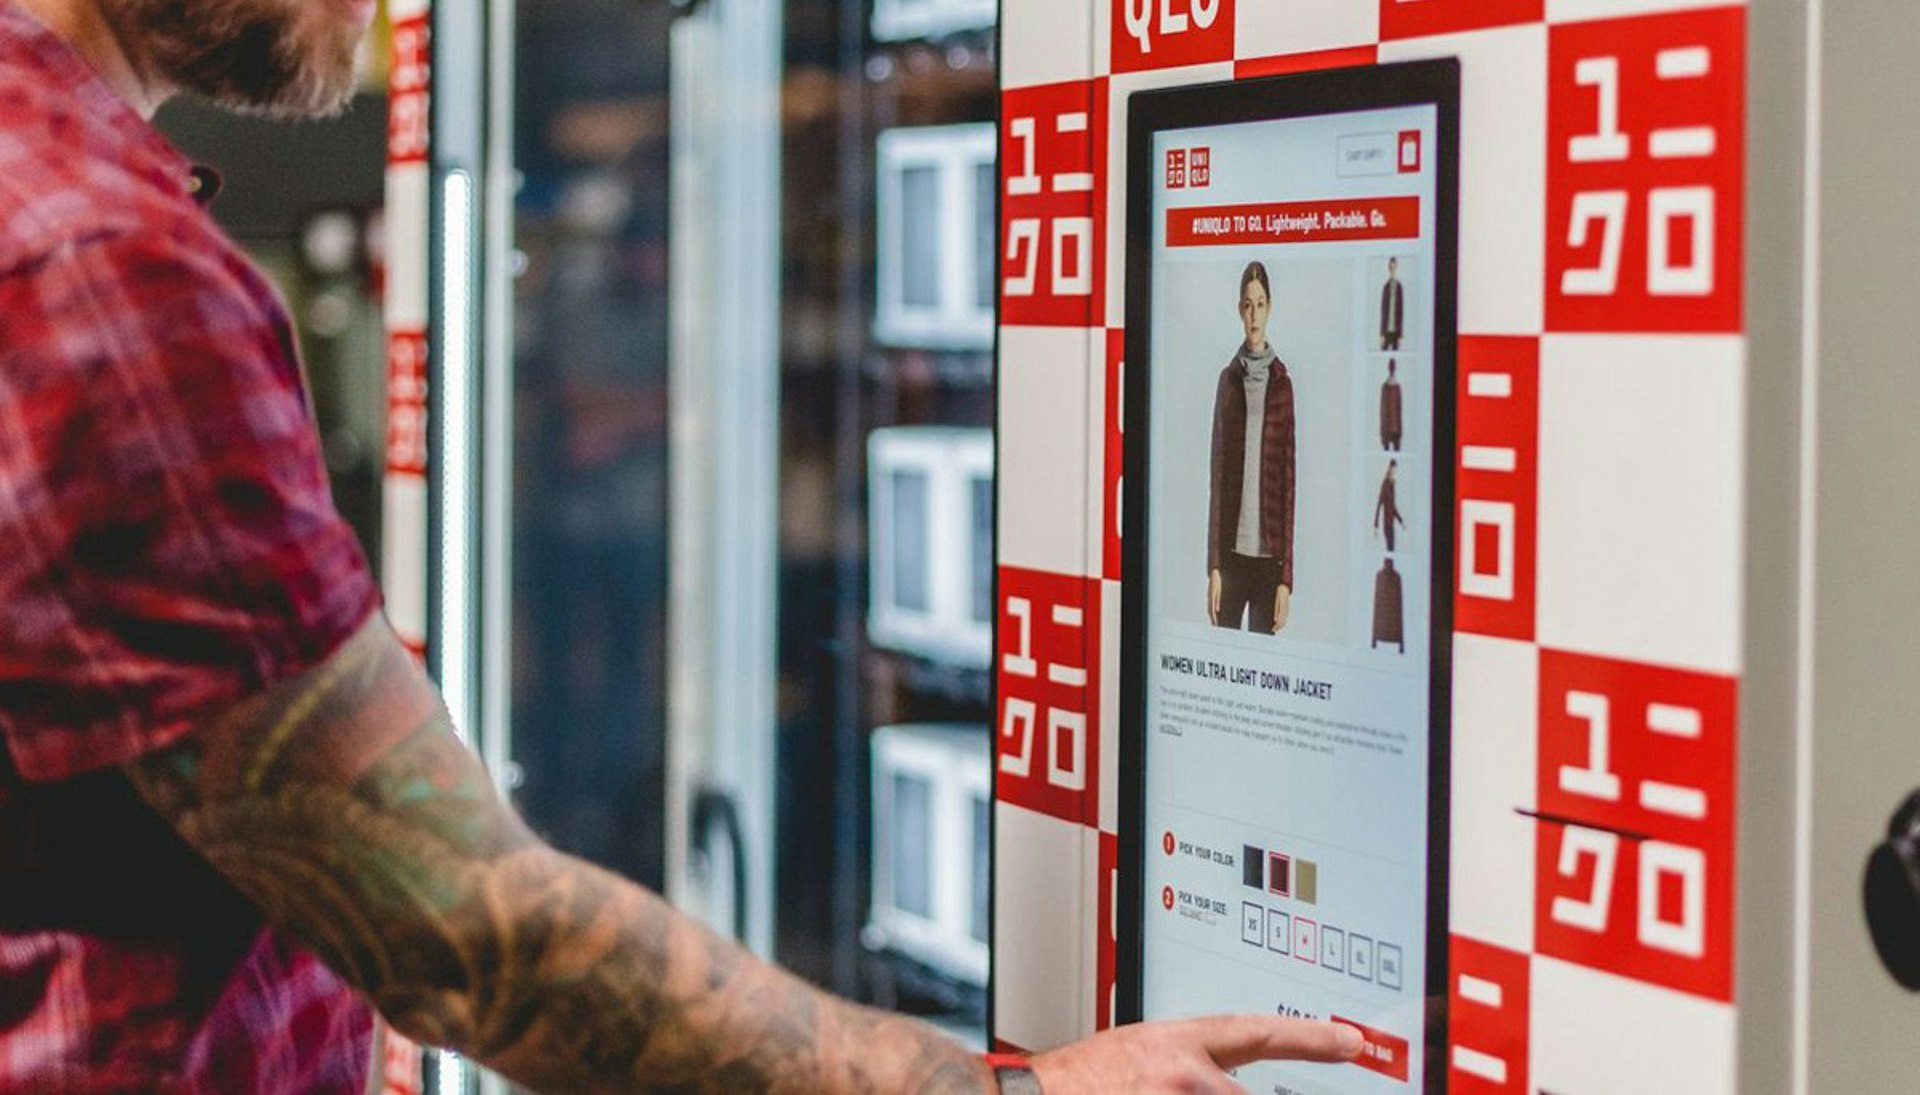 USA-San Francisco 샌프란시스코다운 자판기: The World News (9)